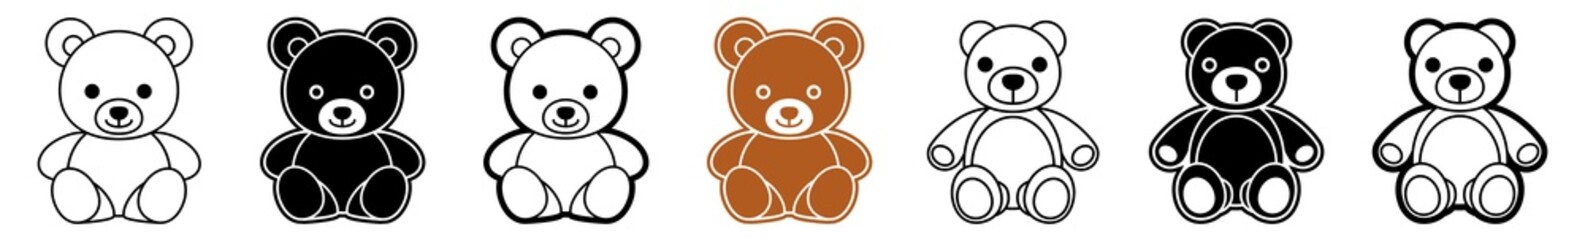 Teddy Bear Icon Brown Teddy Bear Toy Set | Teddy Bears Icon Love Vector Illustration Logo | Stuffed Teddy-Bear Happy Teddy Bear Icon Isolated Collection